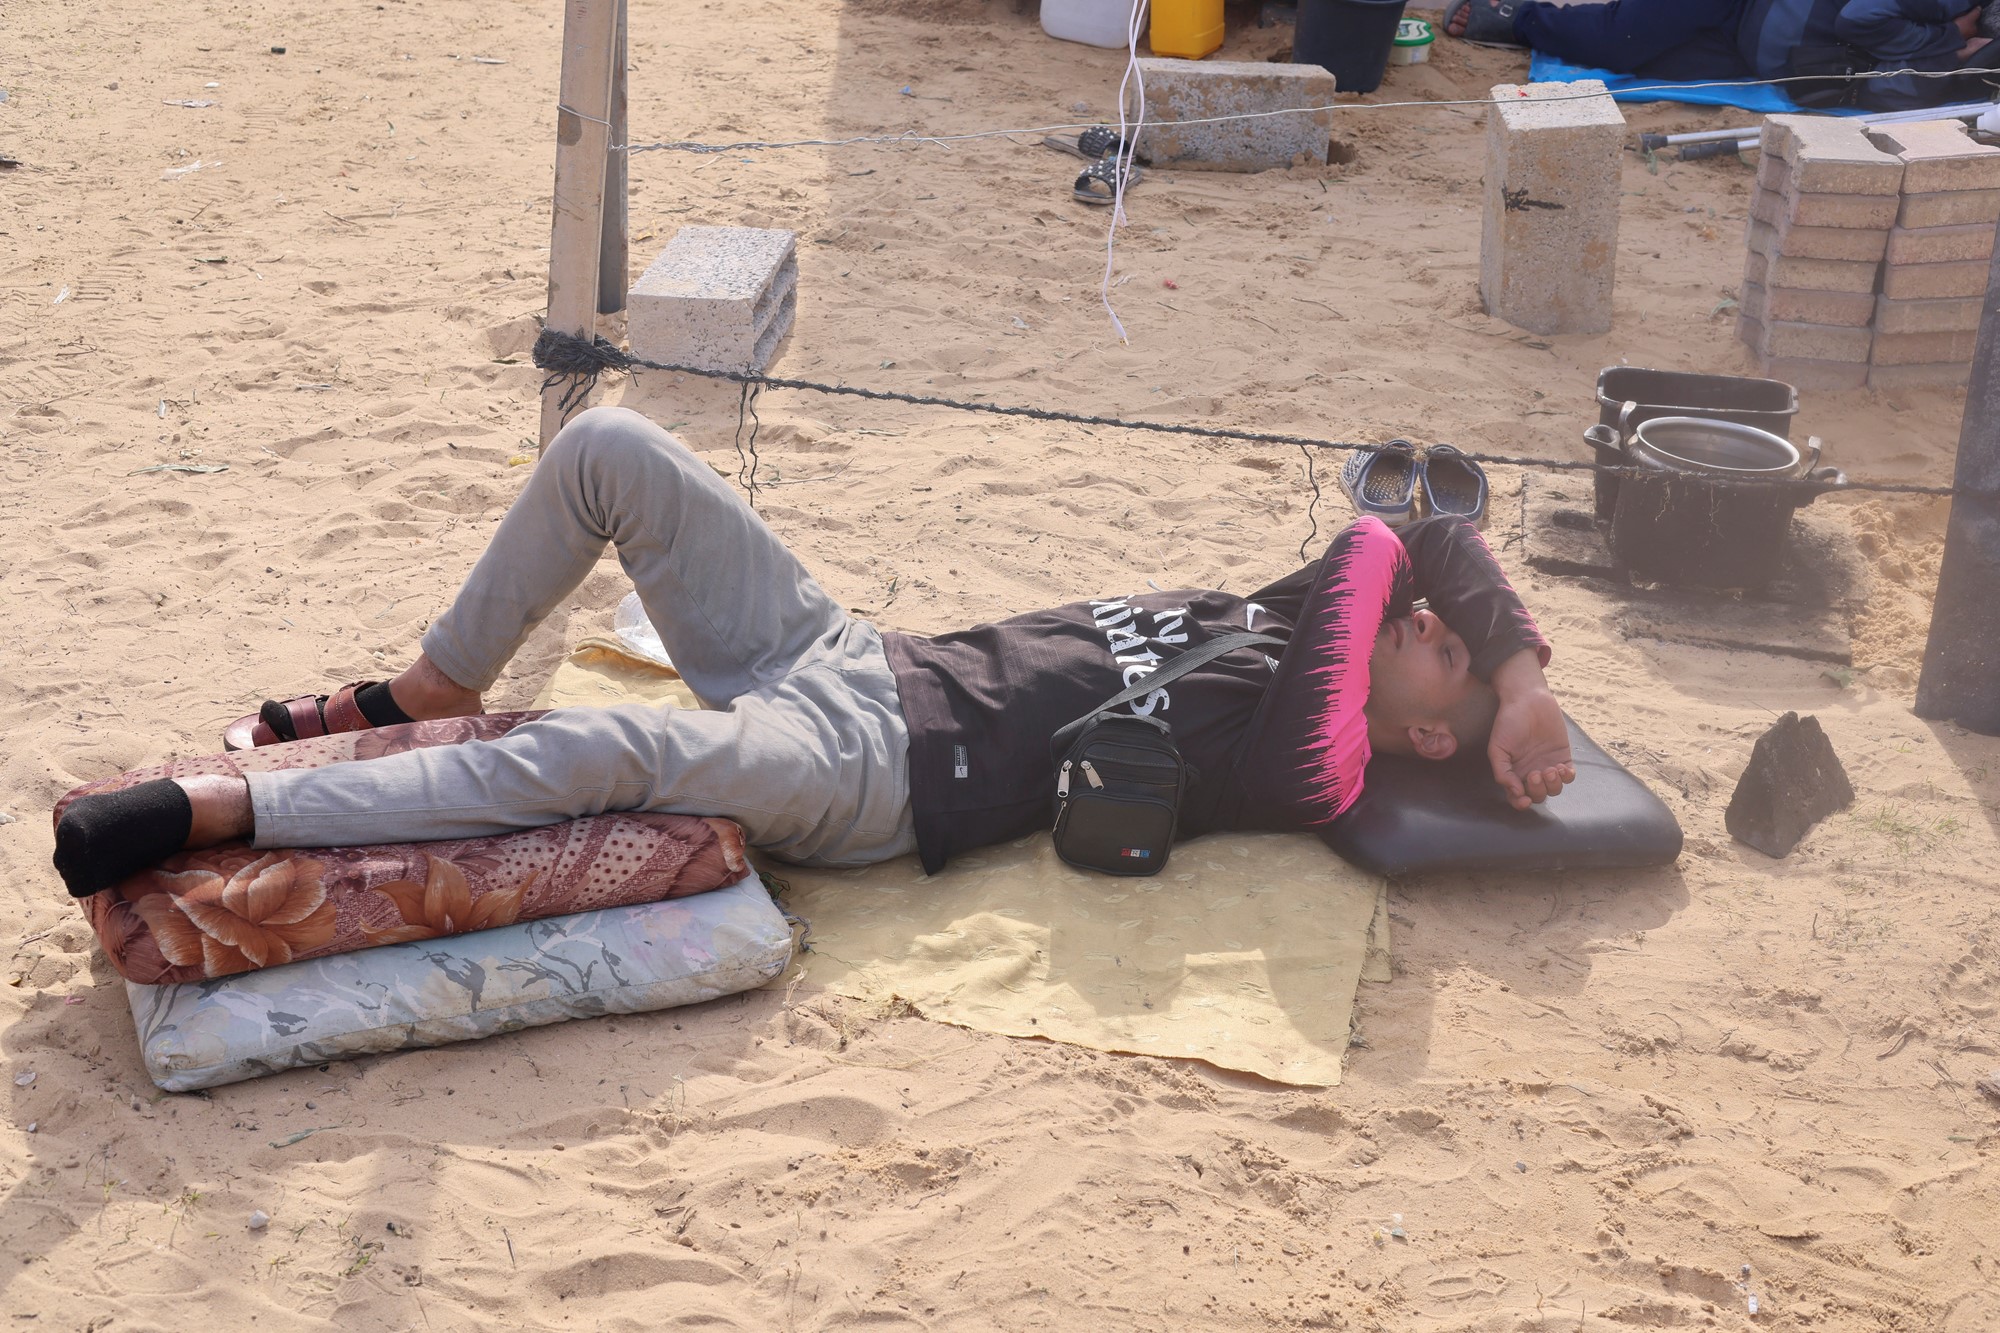 Man lies on the sand ground 